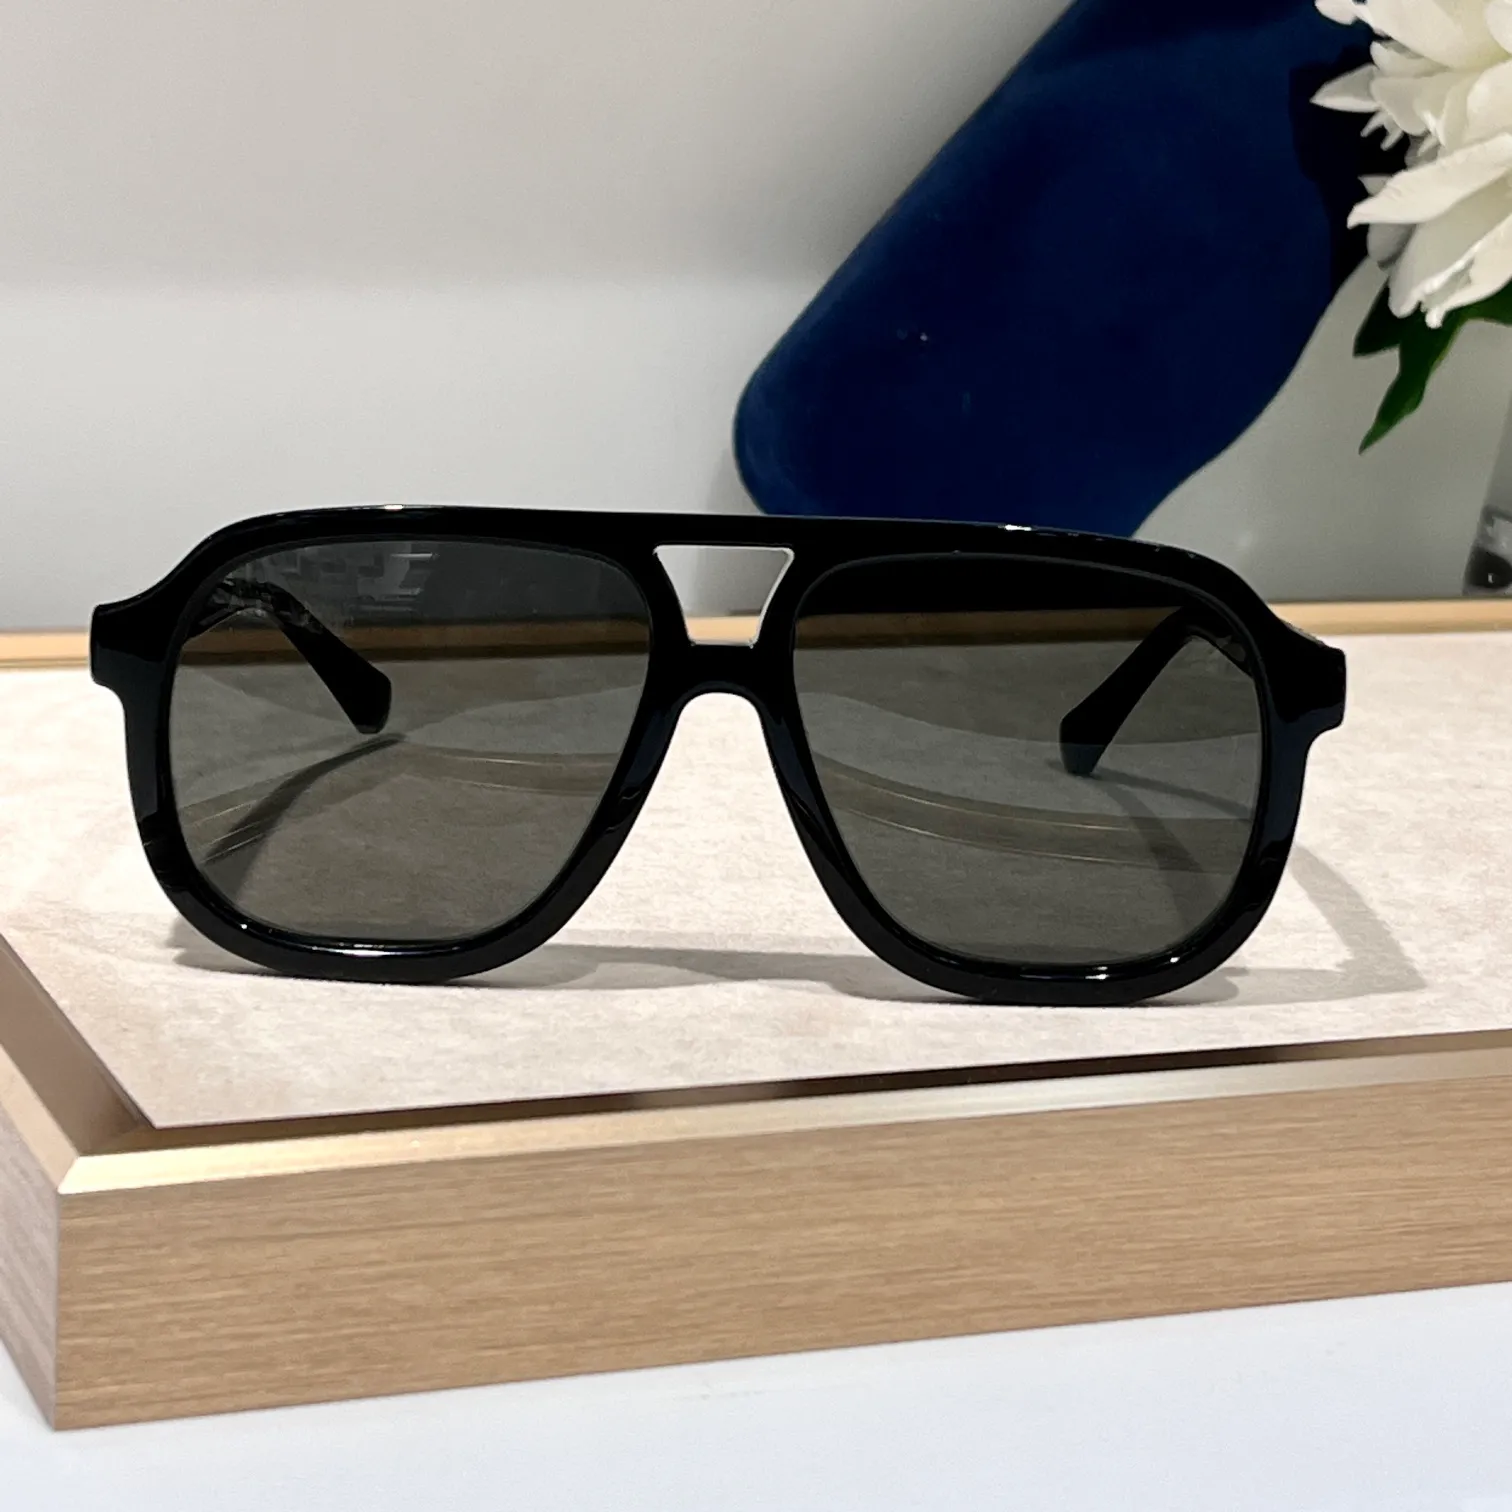 Navigator Sunglasses 1188 Black Grey Smoke Mens Designer Sunglasses Shades Sunnies Gafas de sol UV400 Eyewear with Box